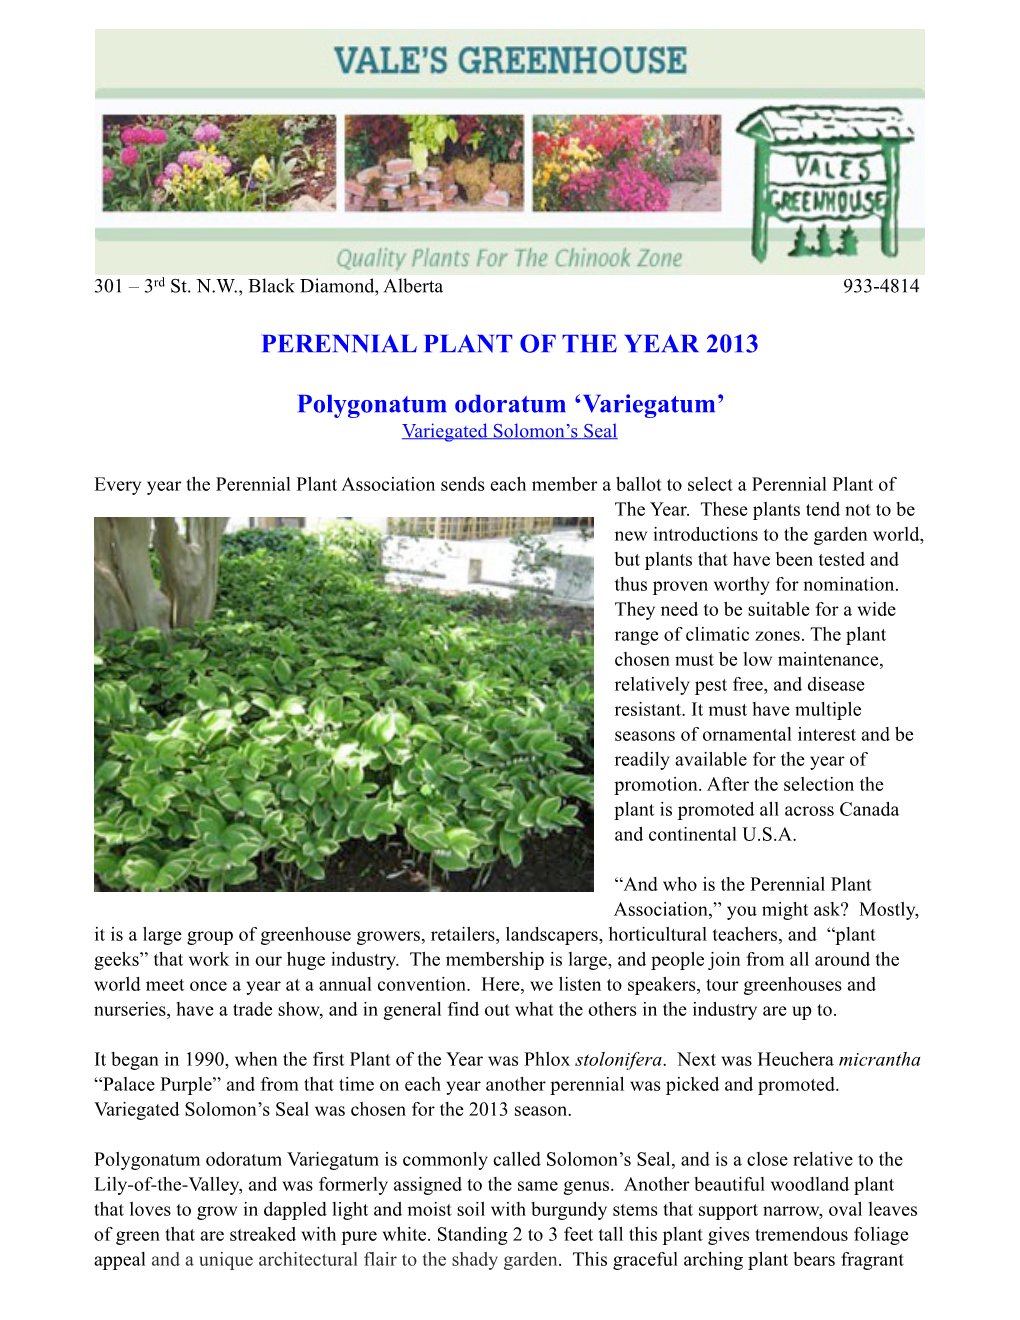 PERENNIAL PLANT of the YEAR 2013 Polygonatum Odoratum